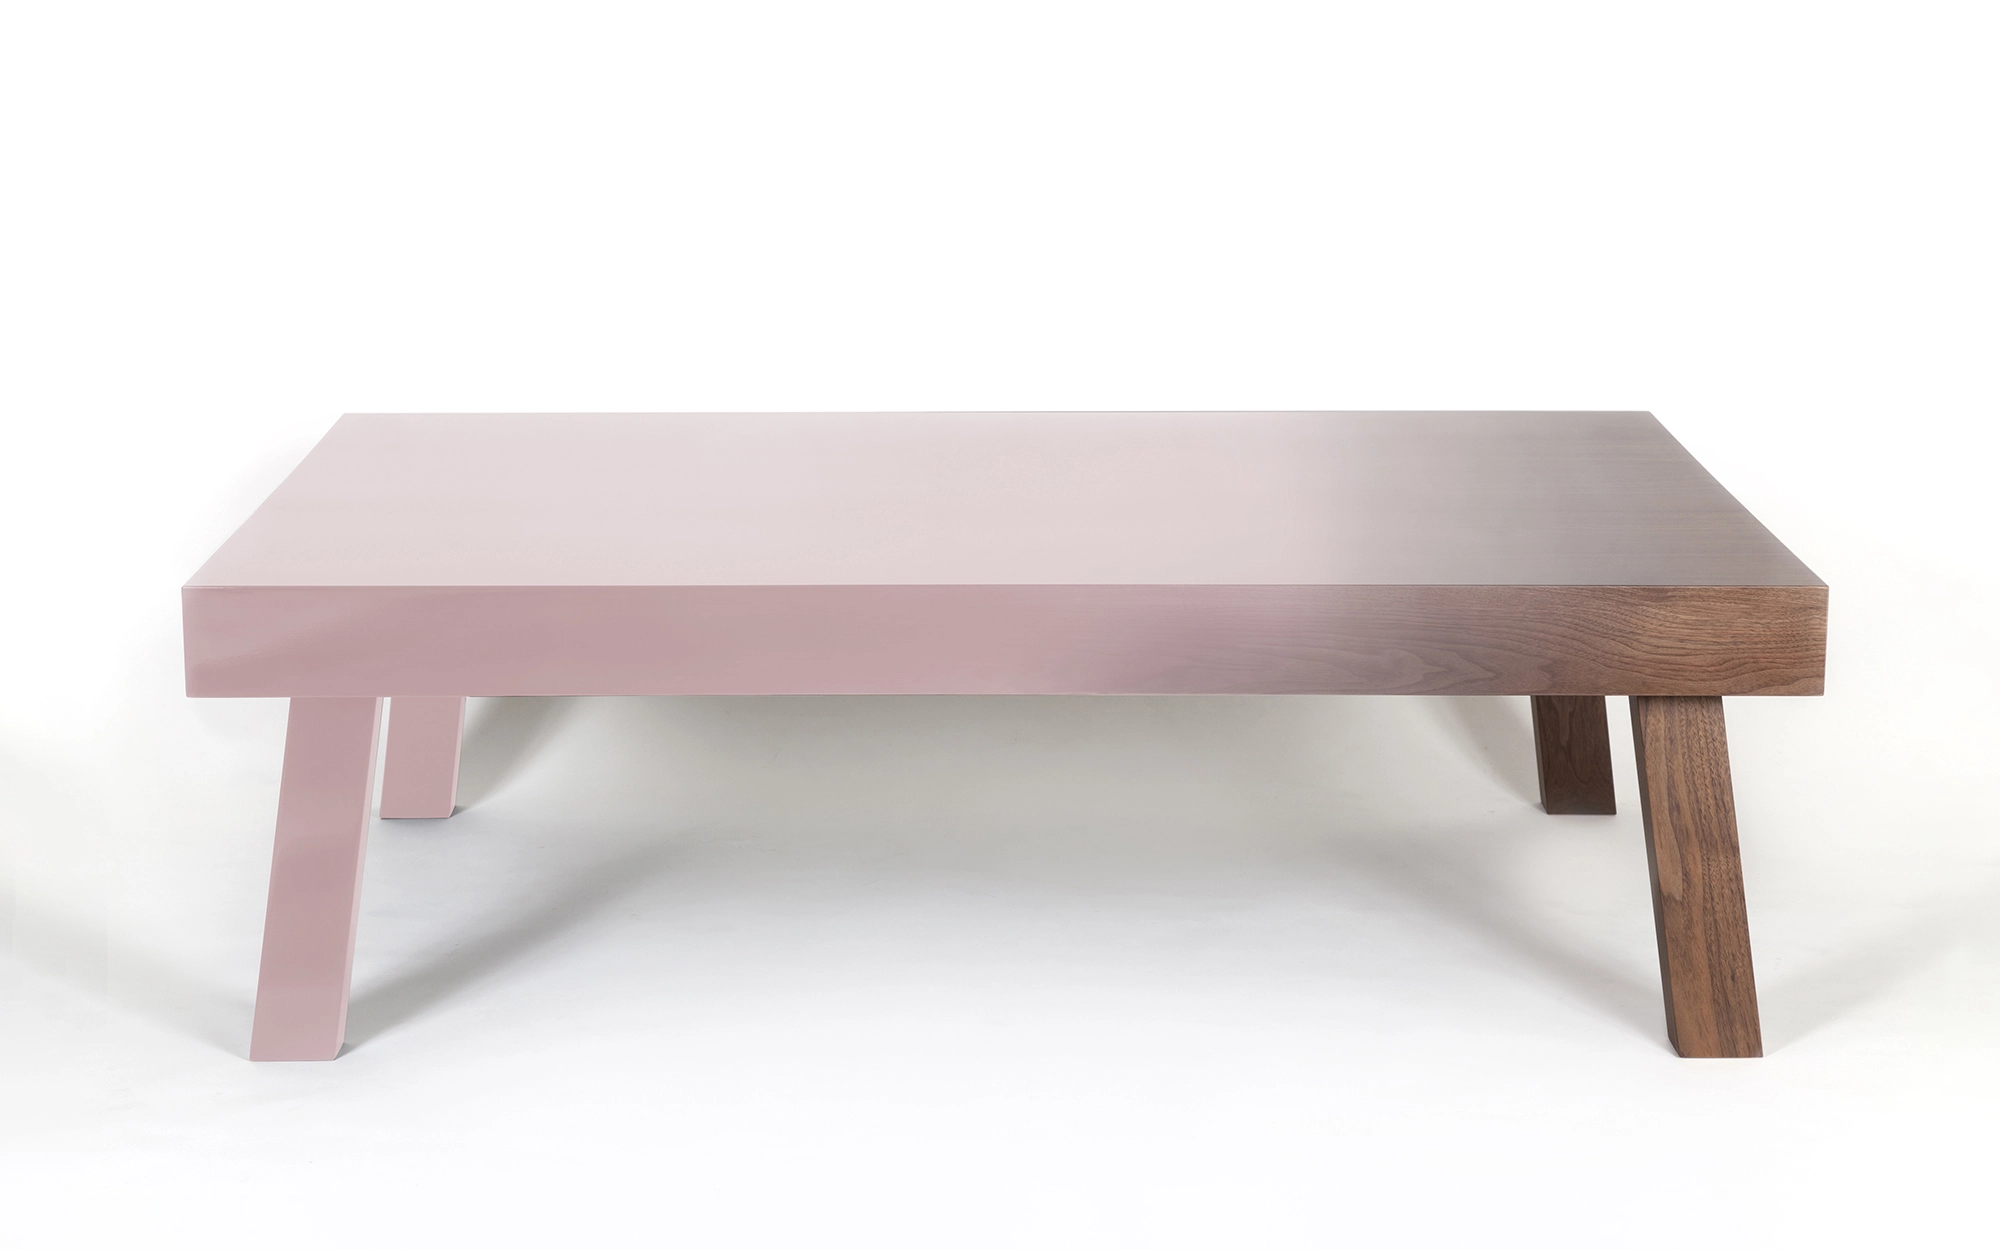 Niebla Coffee Table - Hella Jongerius - Coffee table - Galerie kreo